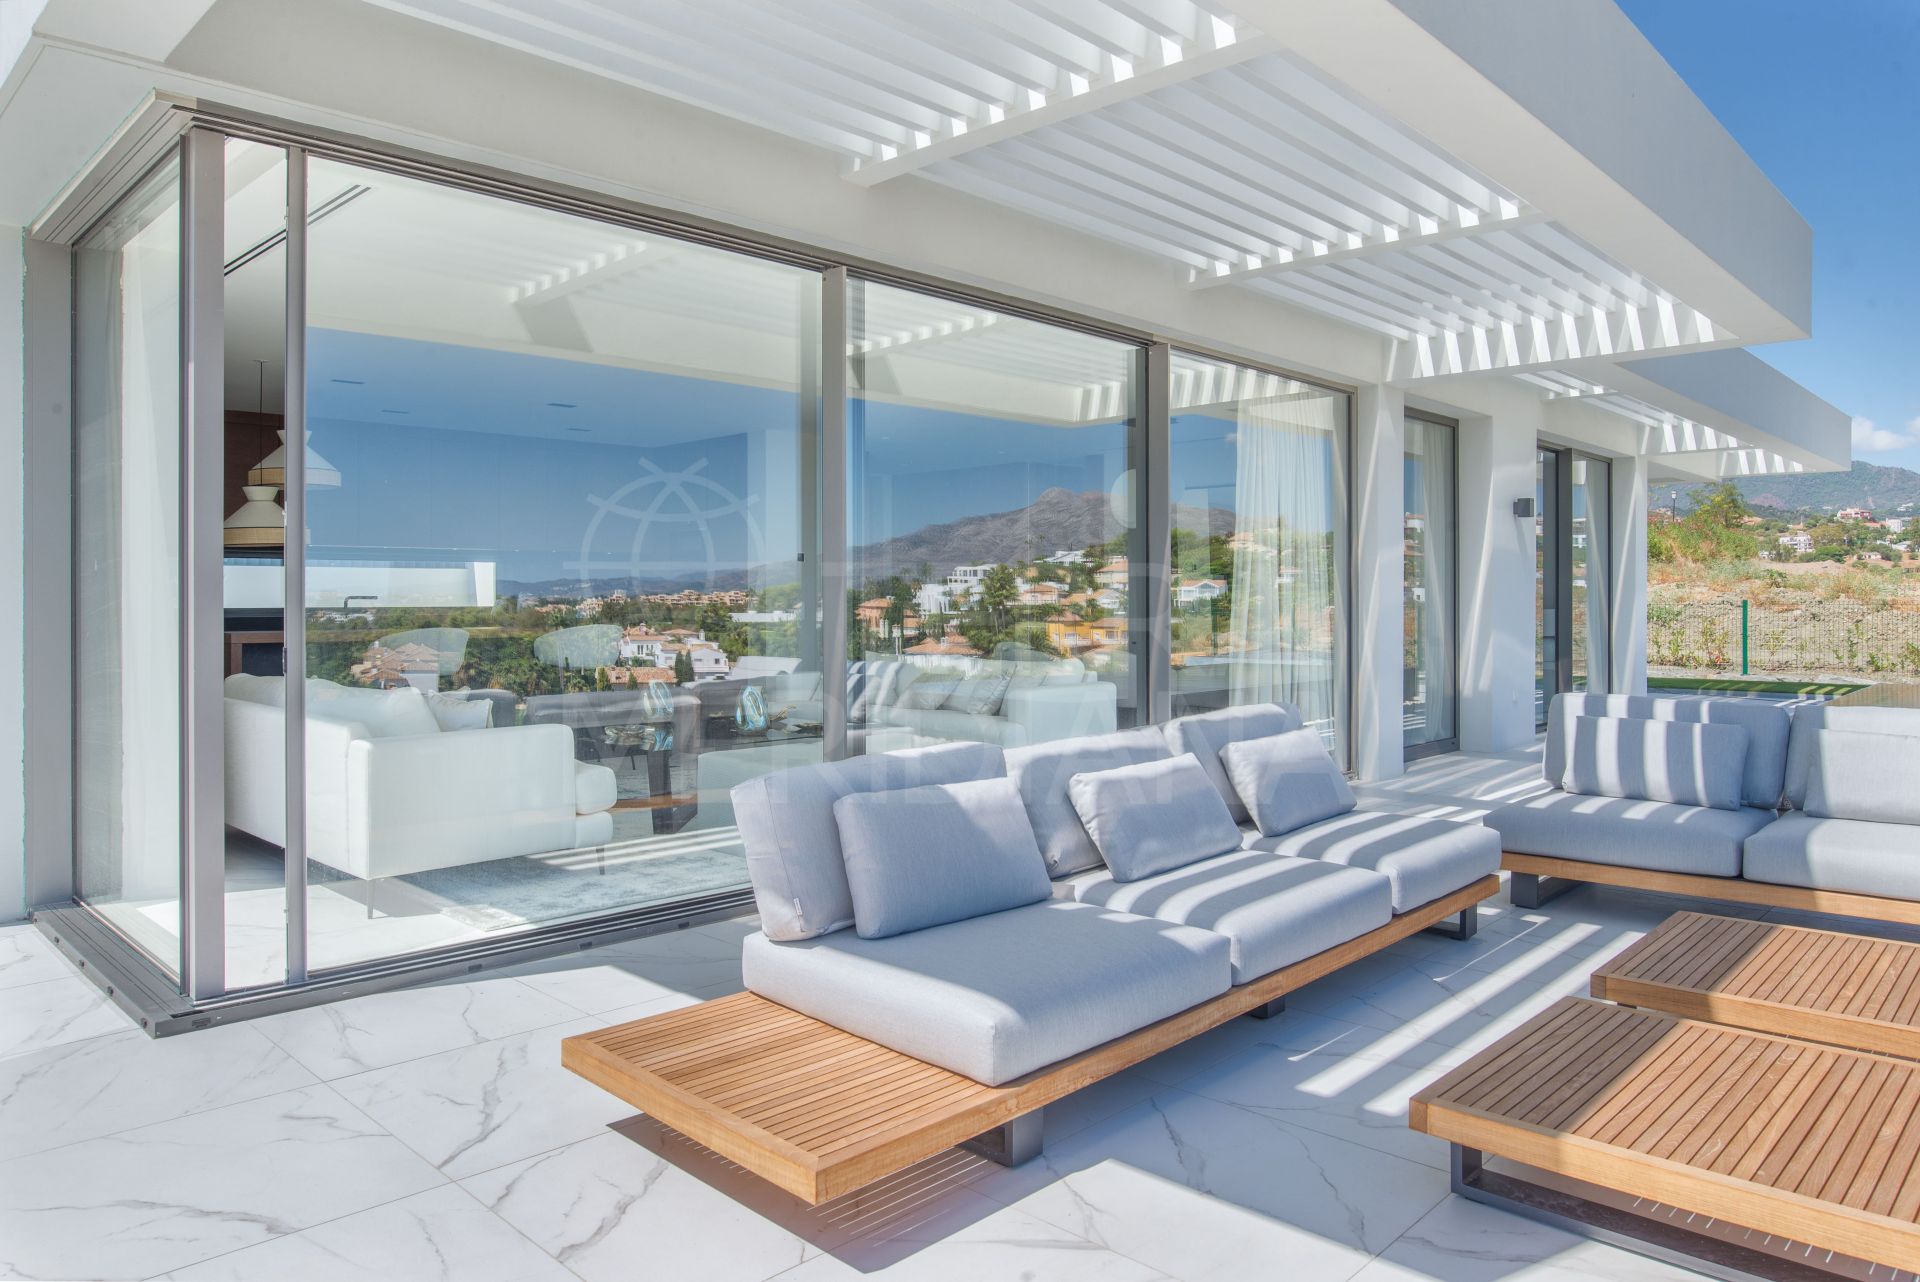 Magnificent brand new luxury 3 bedroom duplex penthouse for sale in El Paraiso, Benahavis